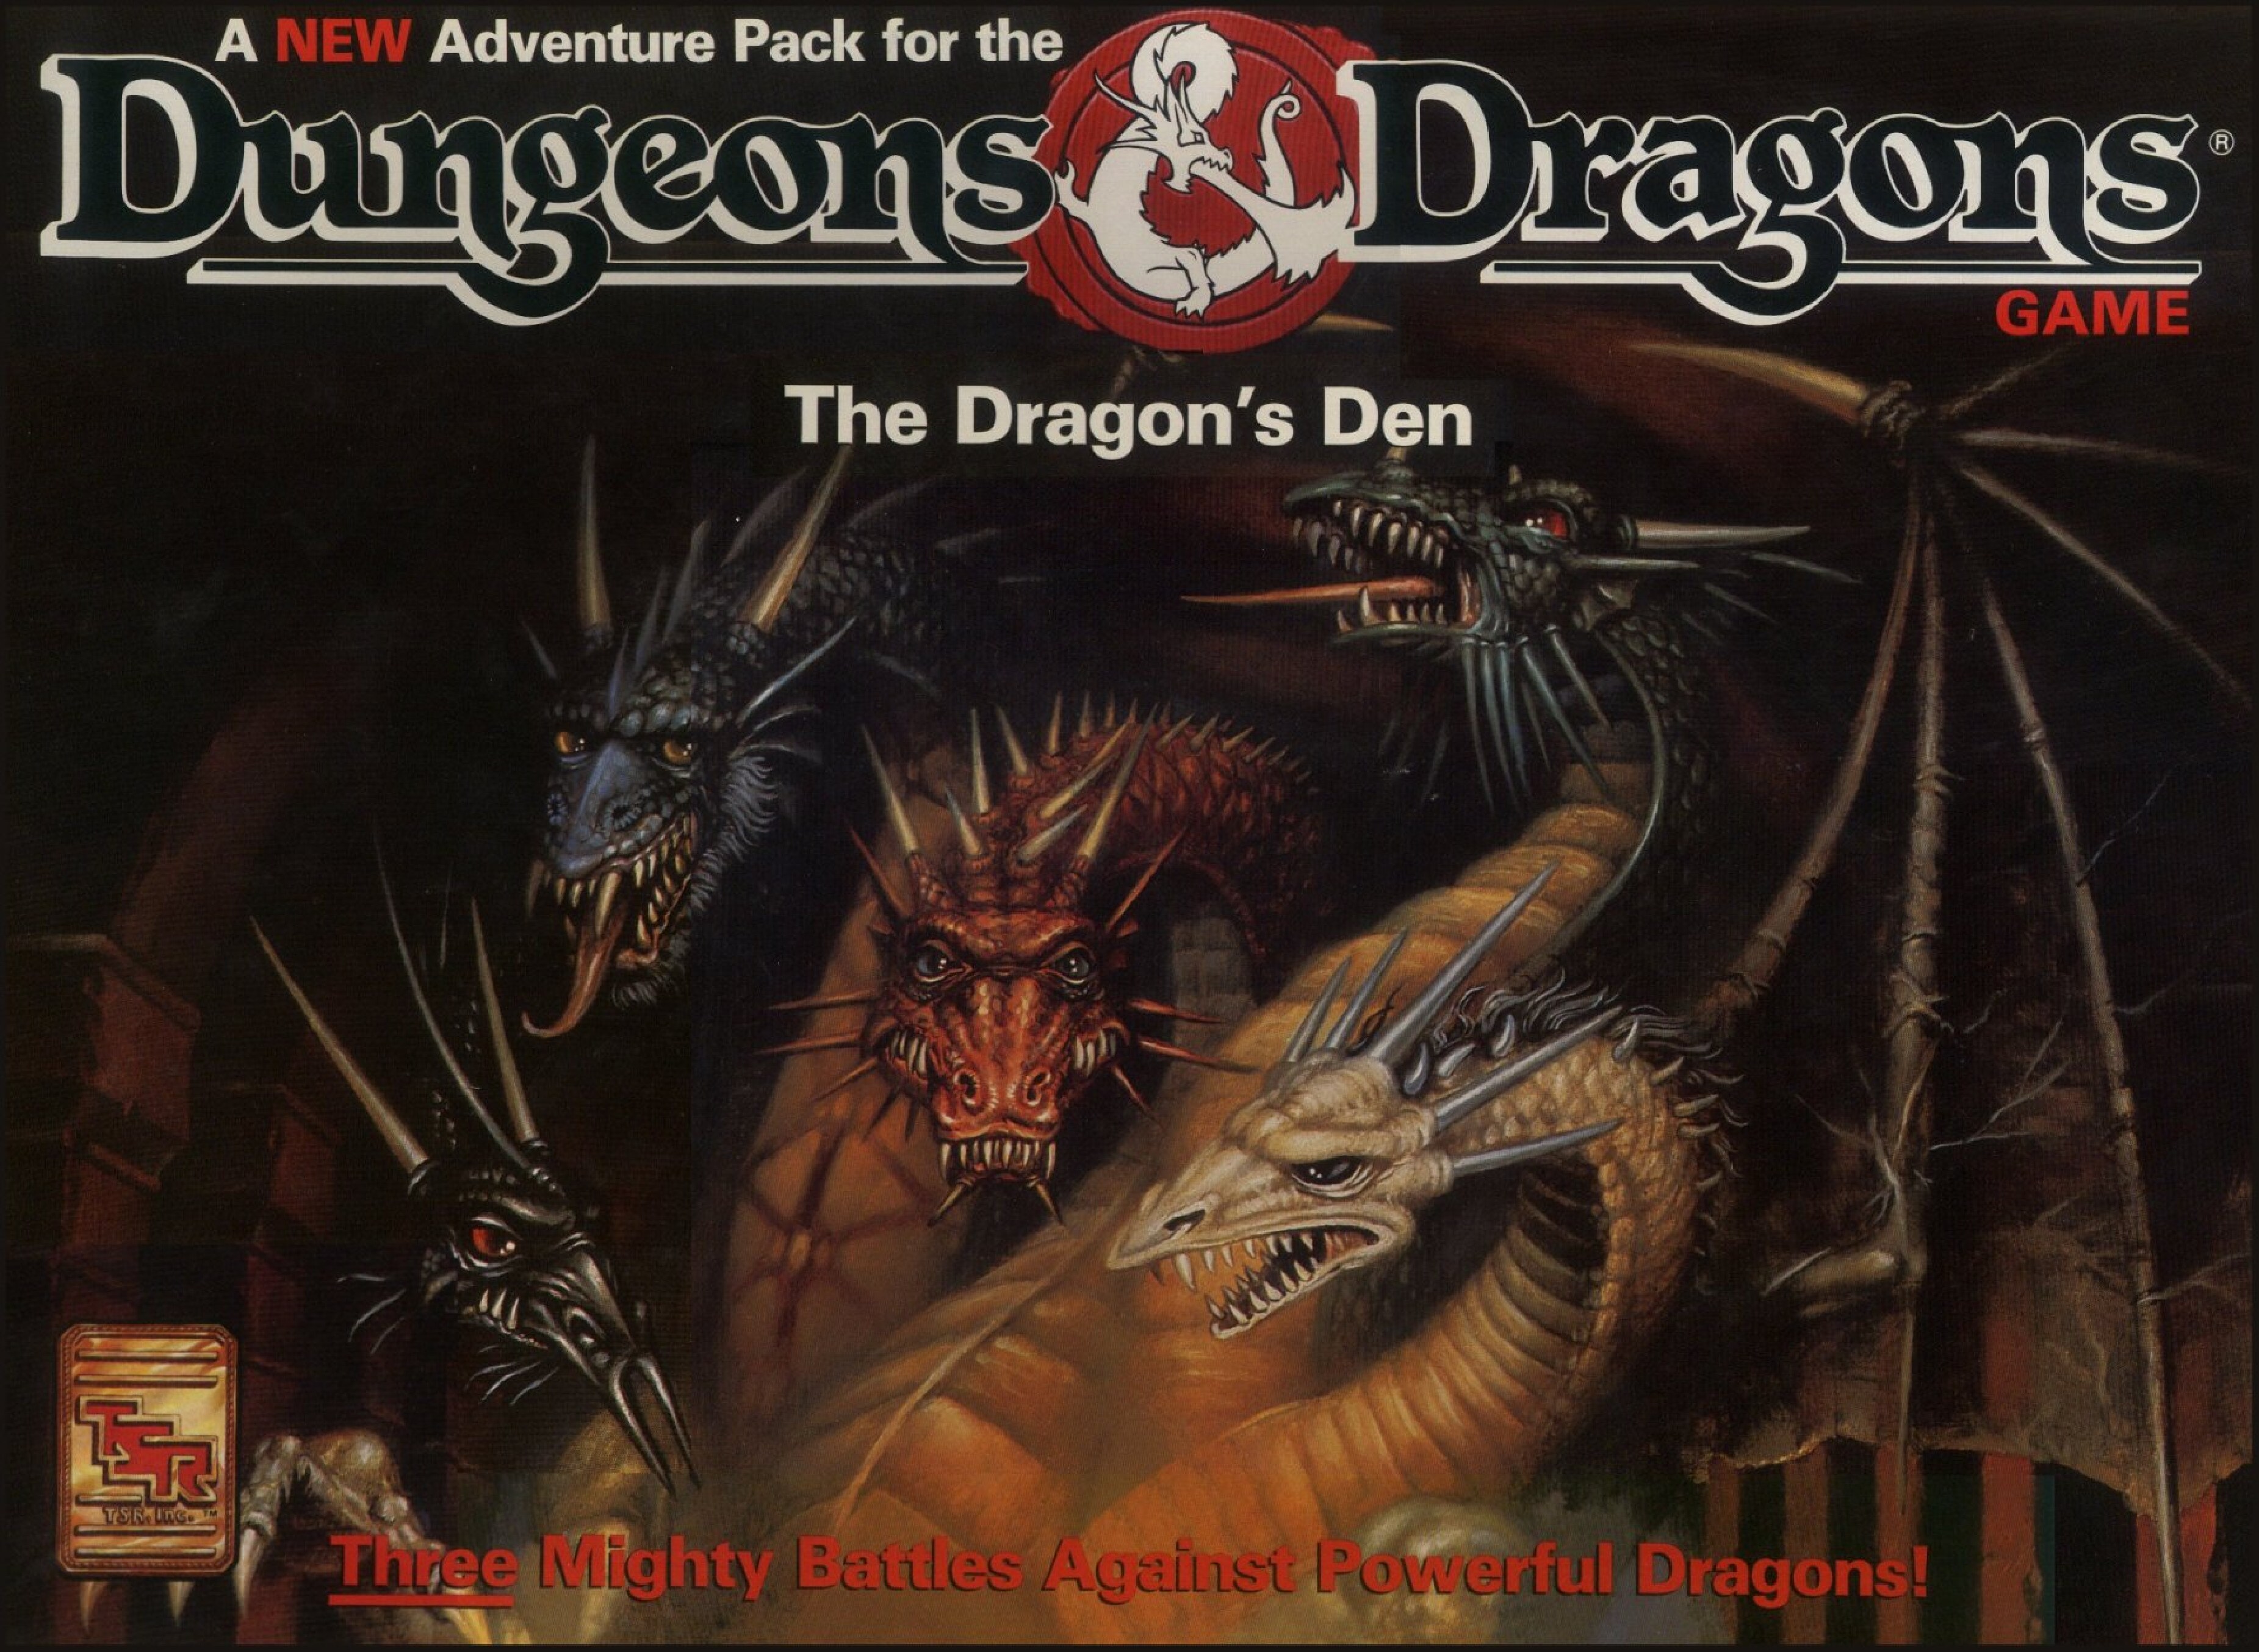 tsr1073 - The Dragon's Den - Box Covers